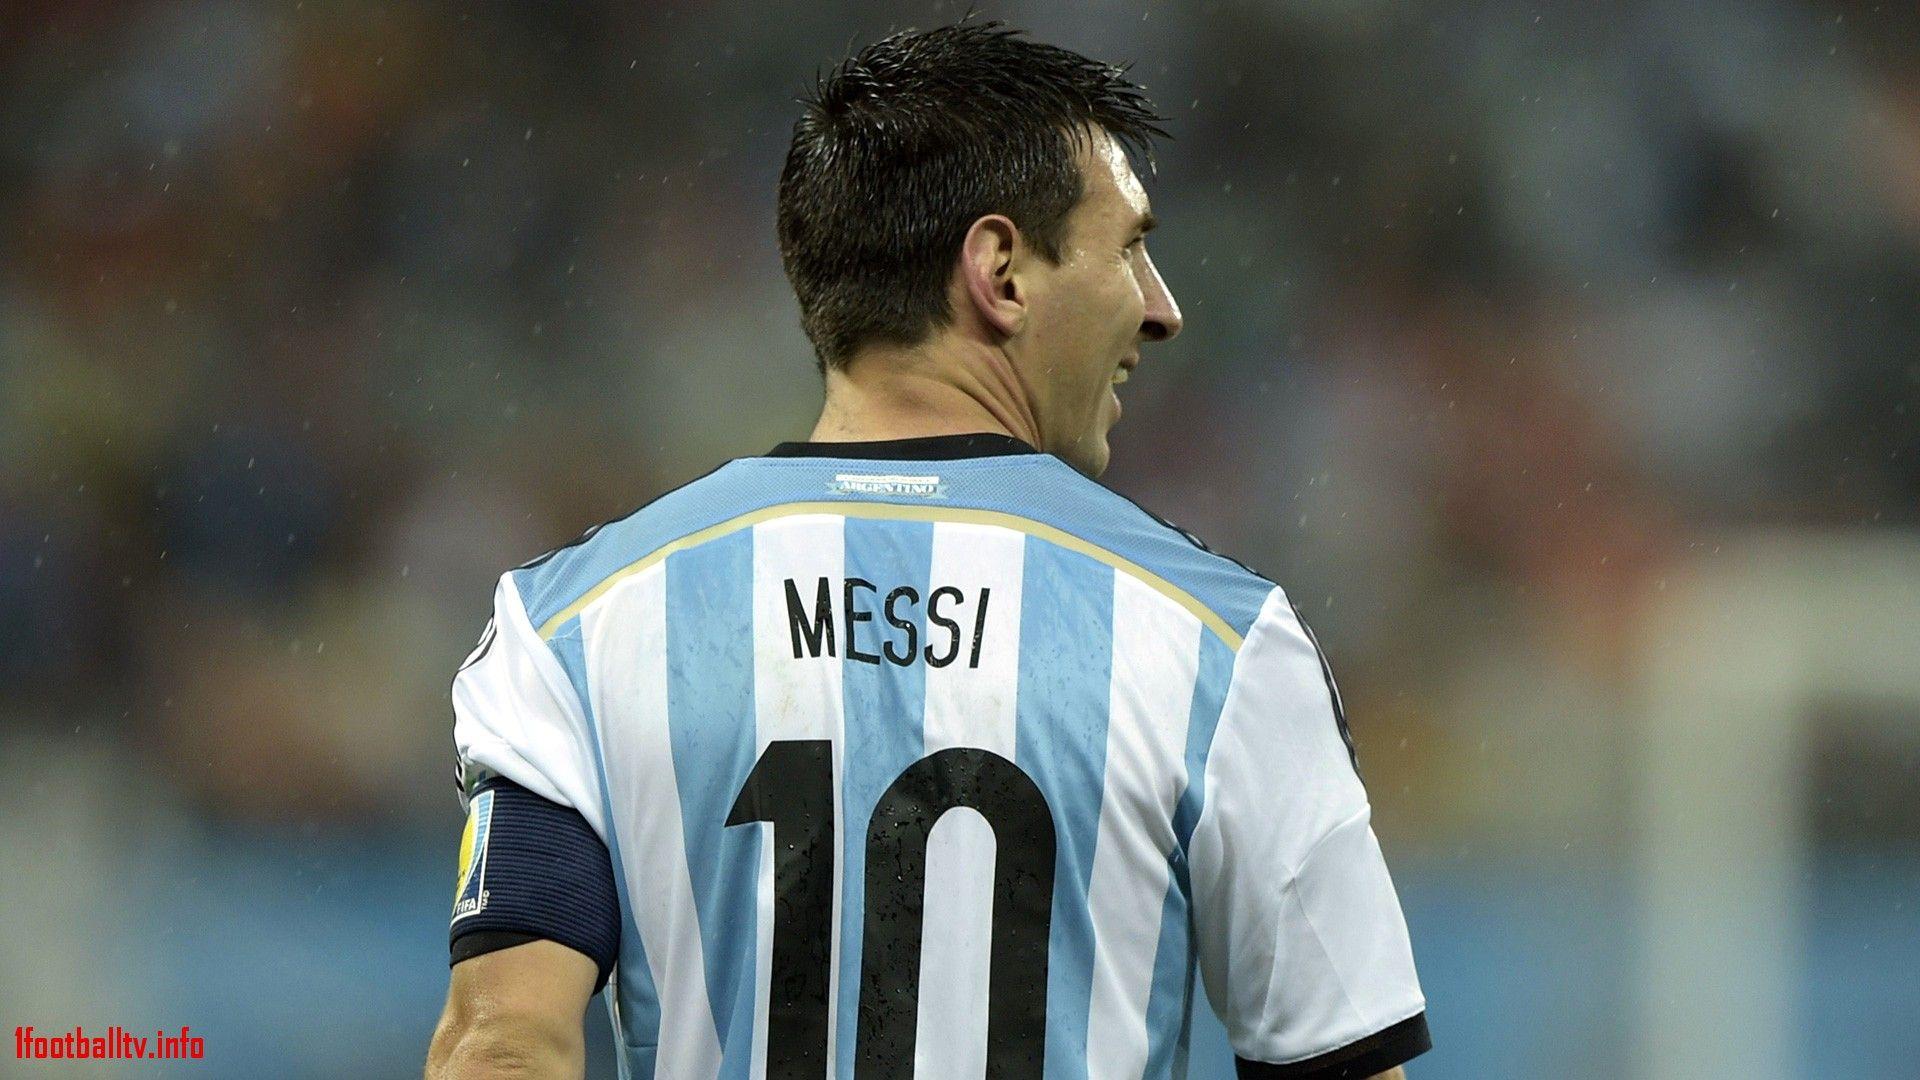 Luxury Lionel Messi Capitan Argentina National Team Football